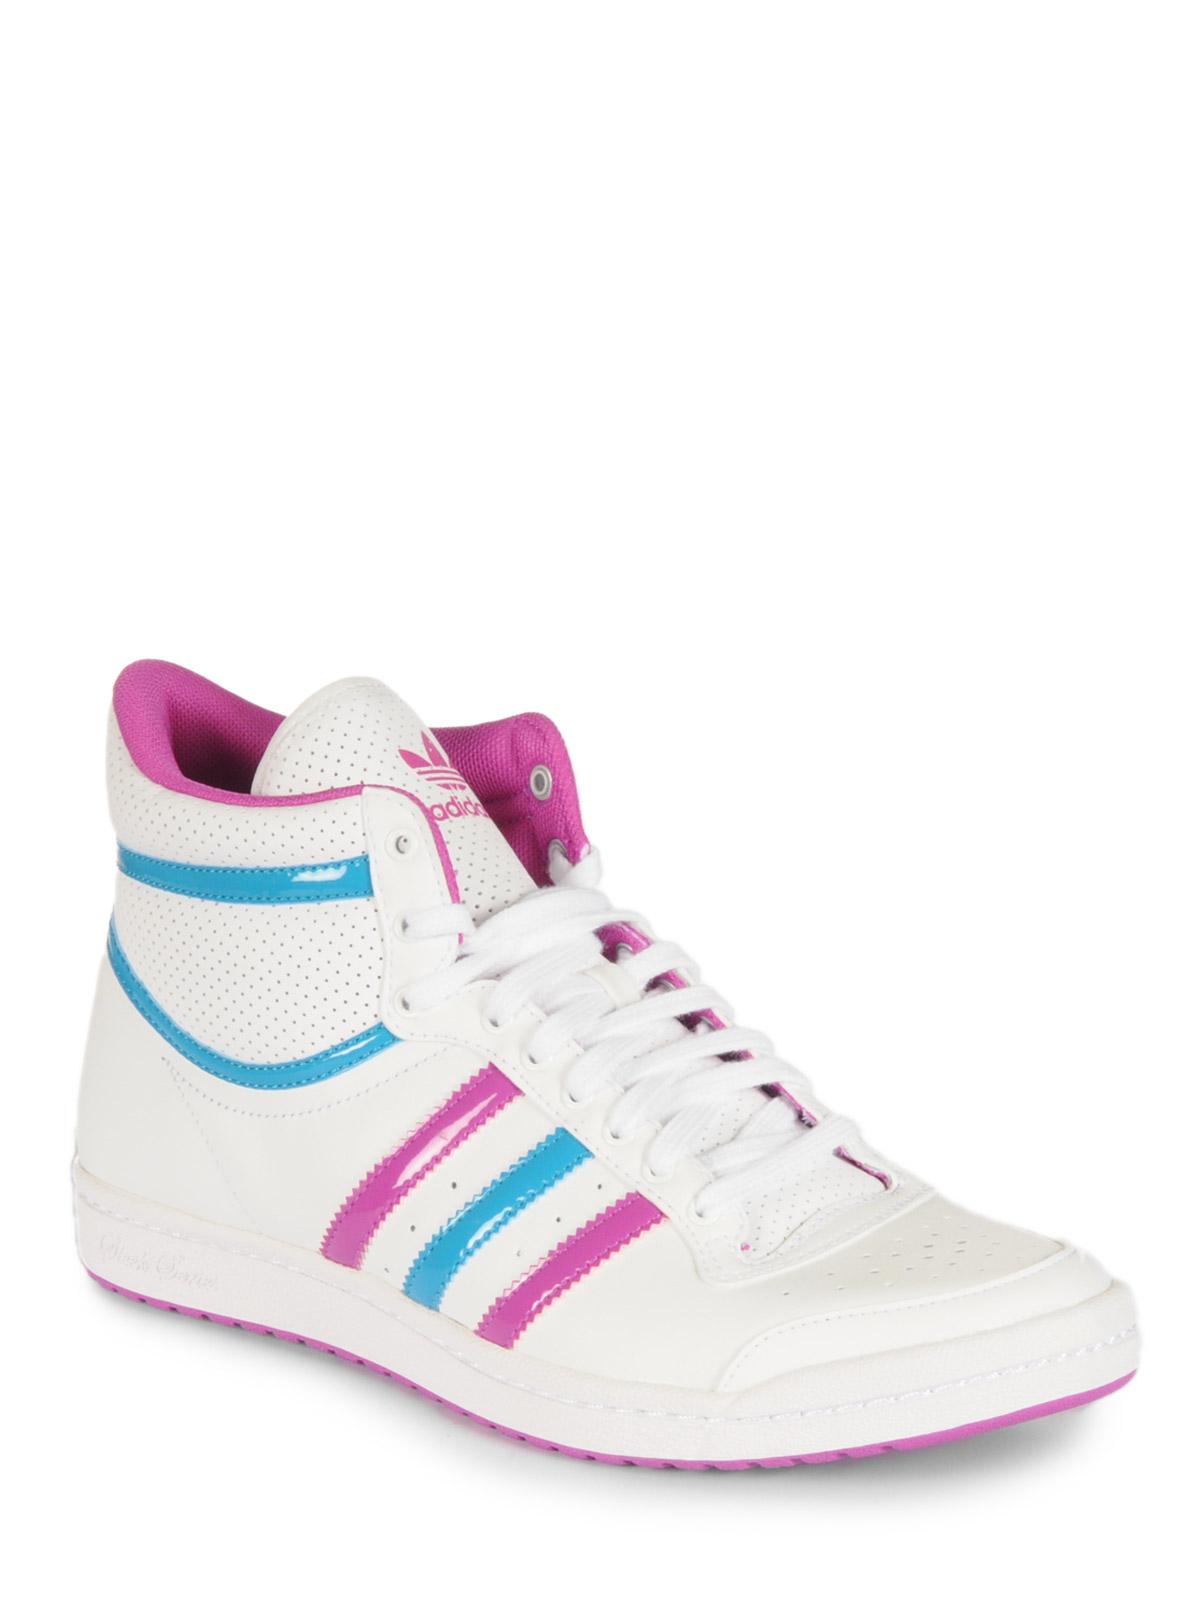 Foto Adidas Zapatillas Top Ten HI Sleek W blanco rosa turquesa EU: 40,5